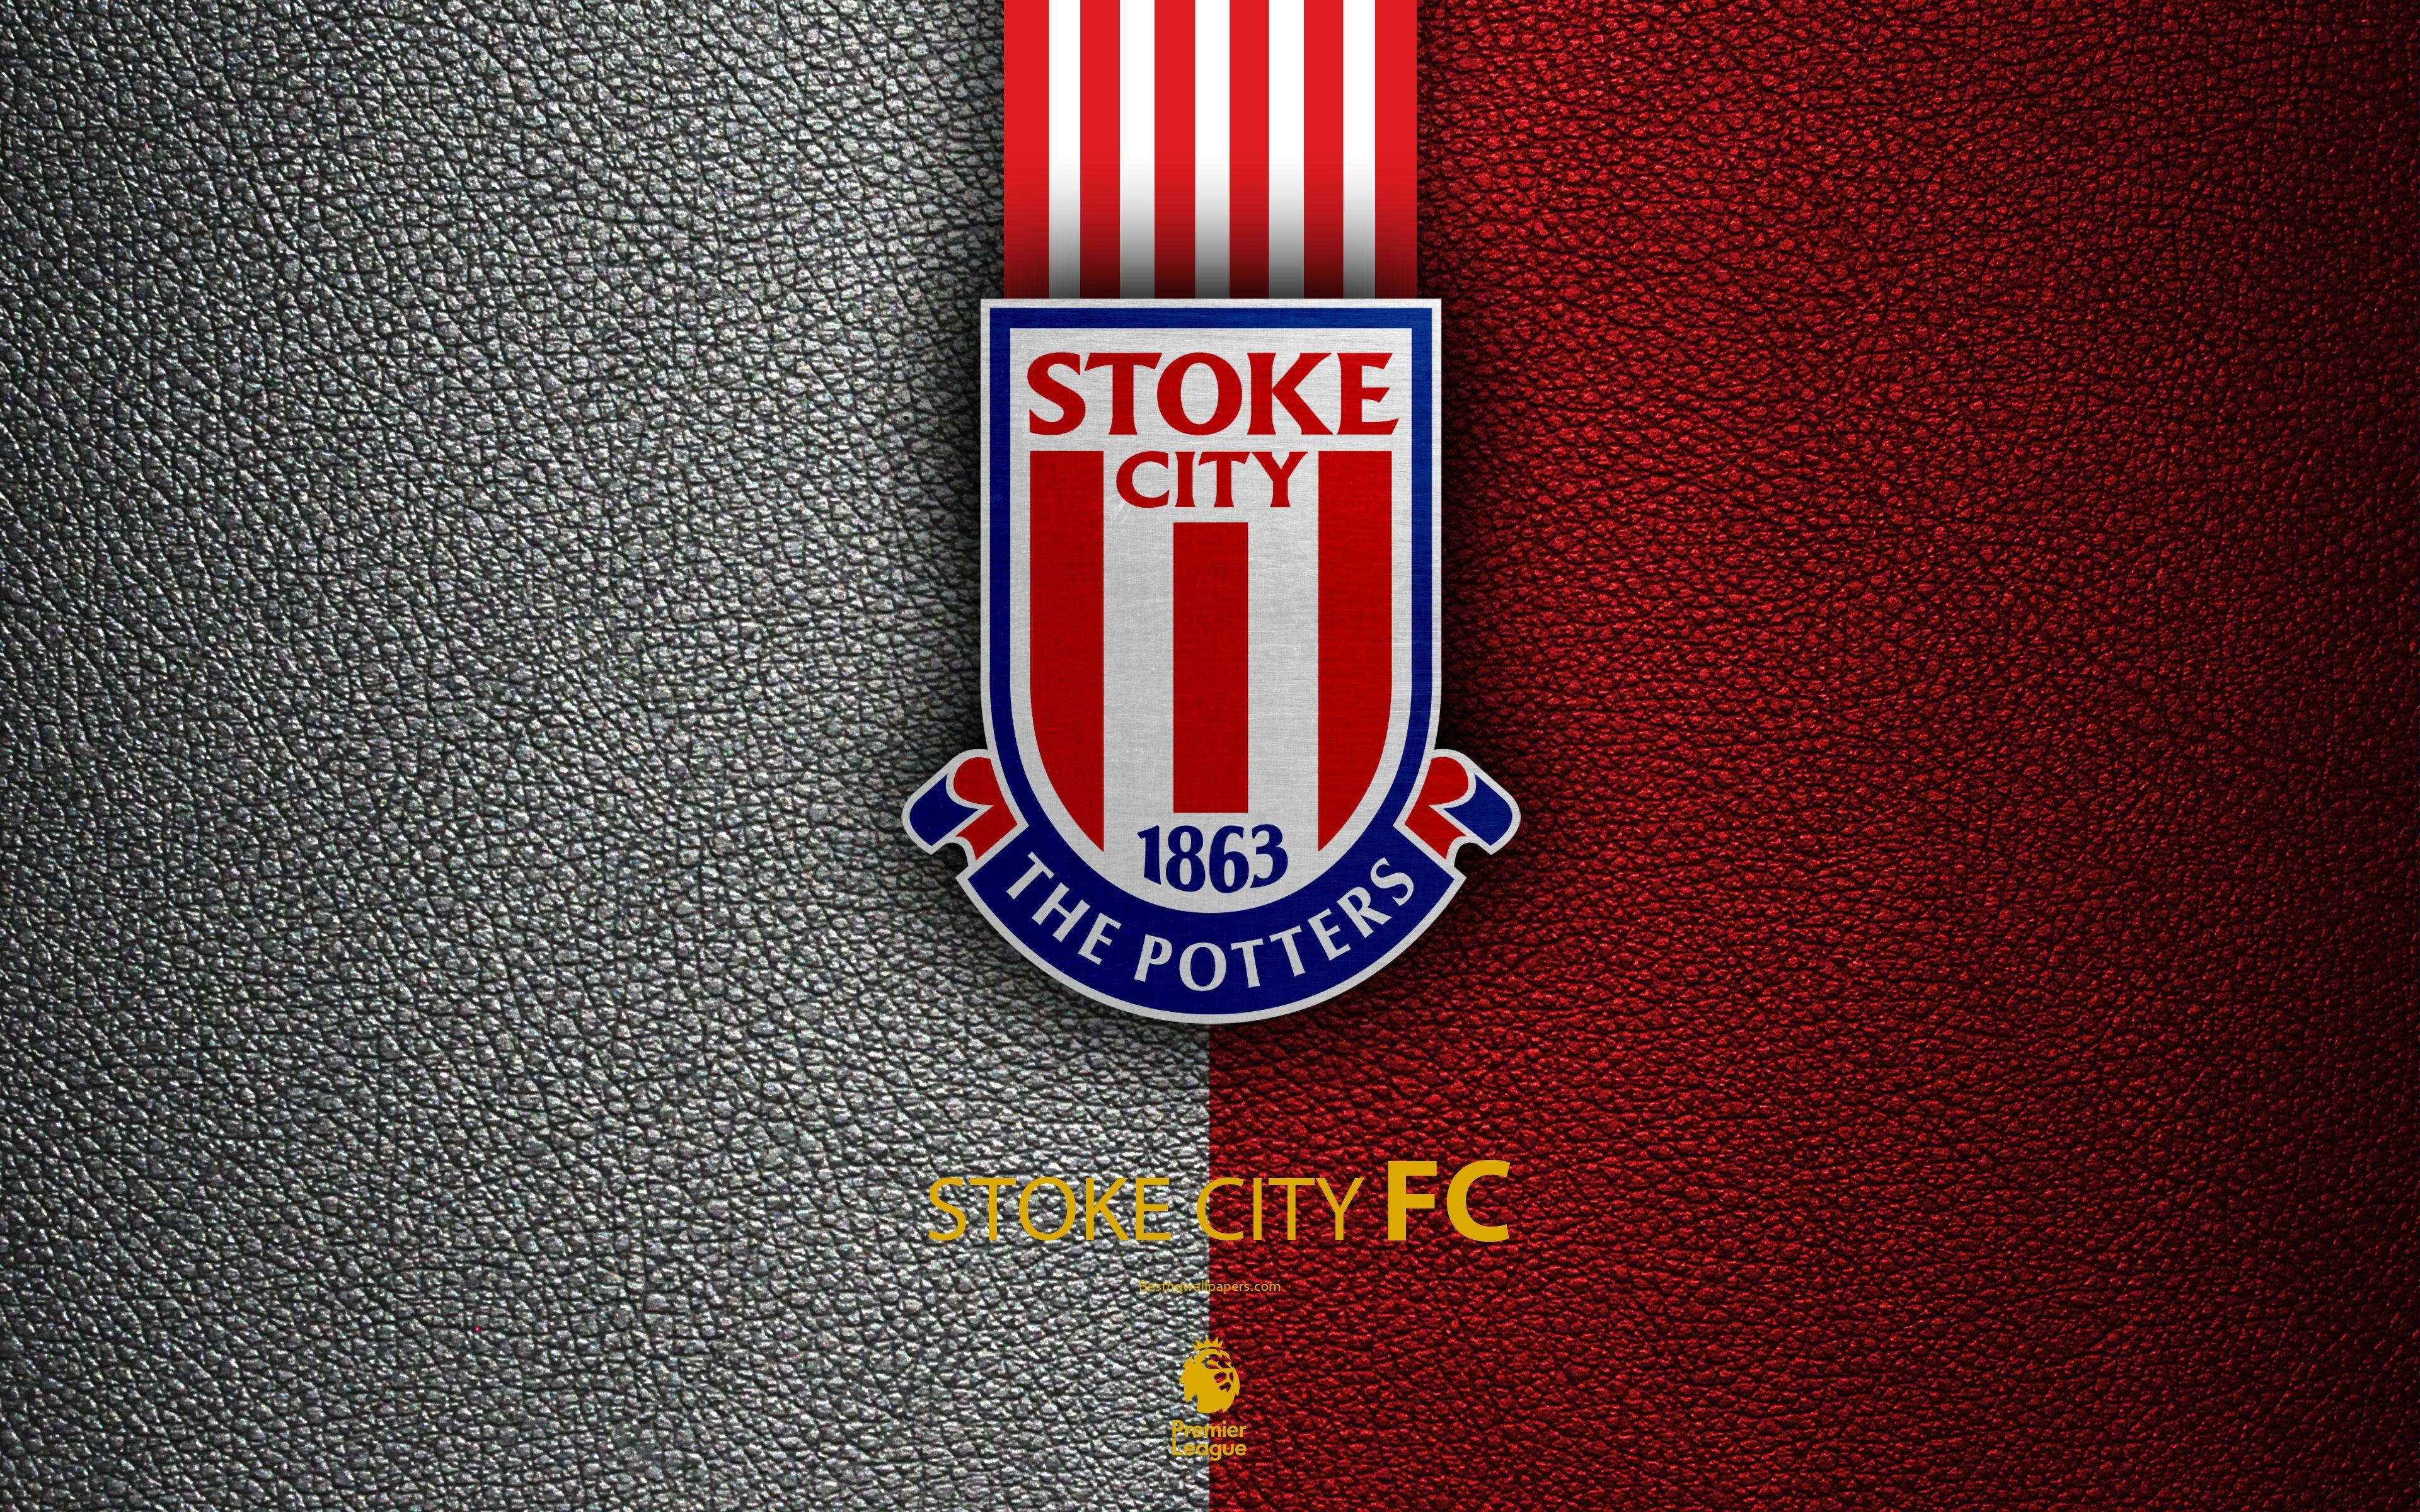 Stoke City F.c. Wallpapers - Wallpaper Cave 4CB